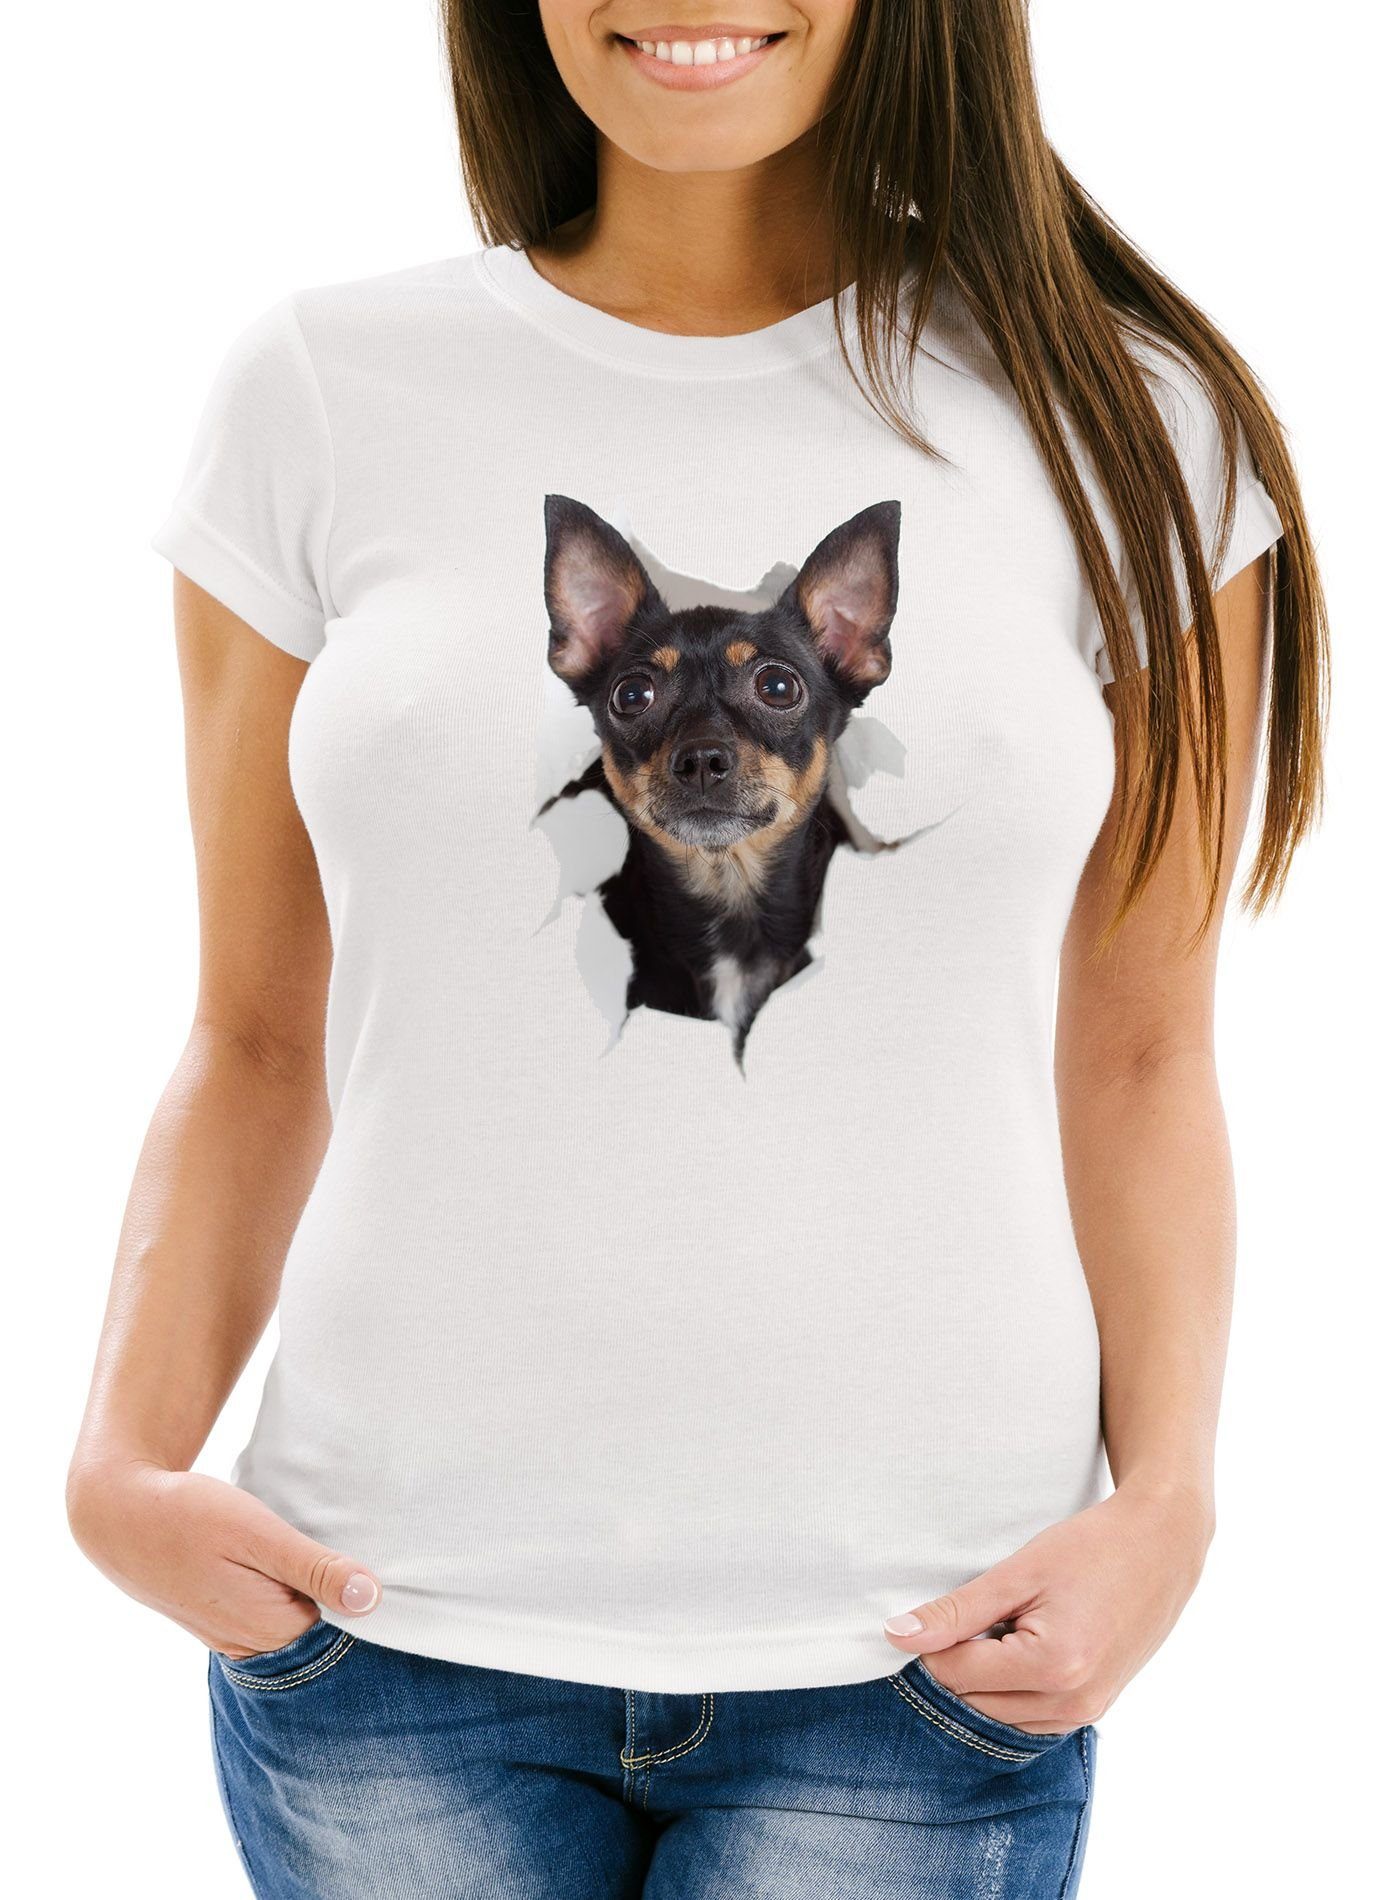 Hund Kopfhörer Tiere Cool Herren T-shirt XS-5XL